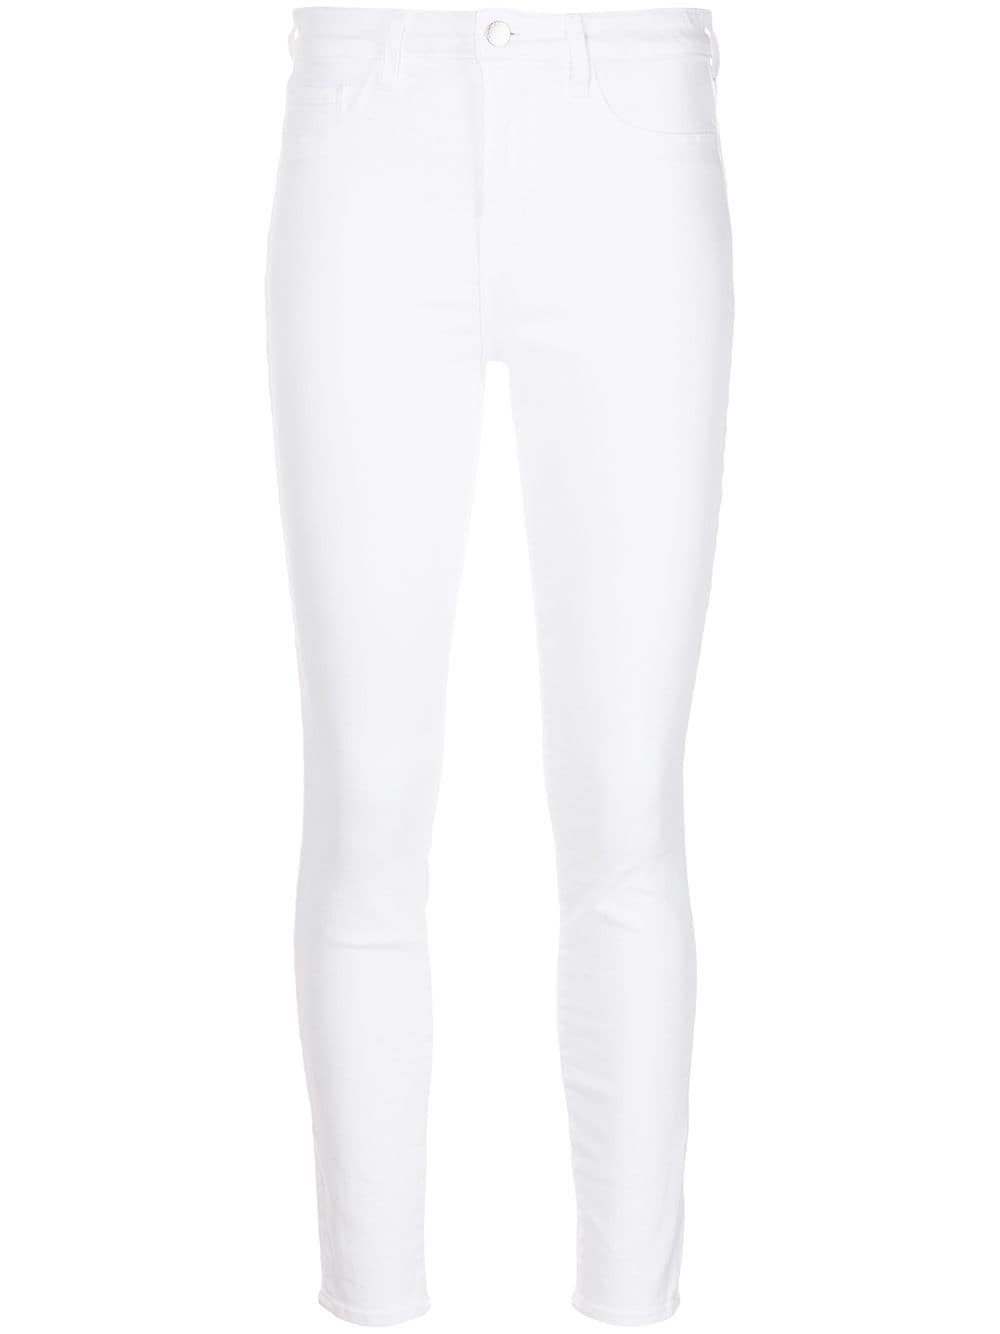 L'Agence Marguerite Skinny-Jeans - Weiß von L'Agence